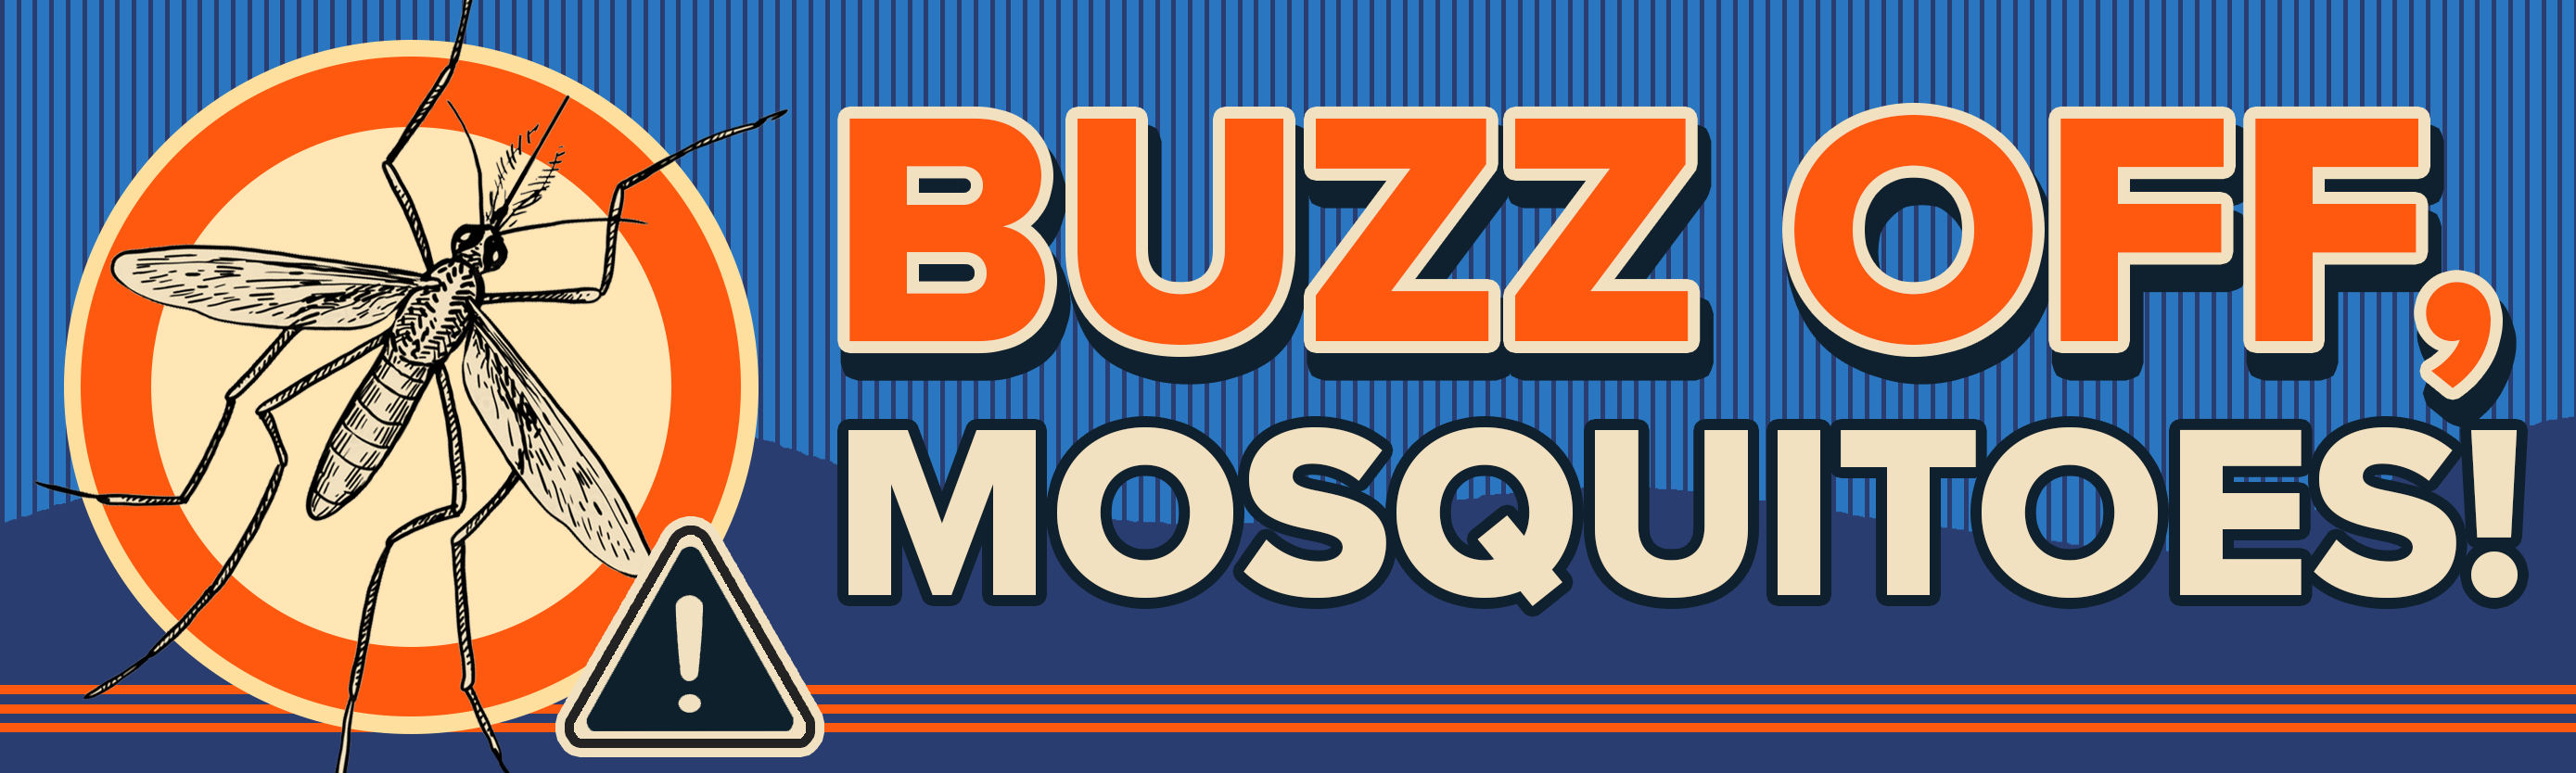 Buzz off Mosquitos - English